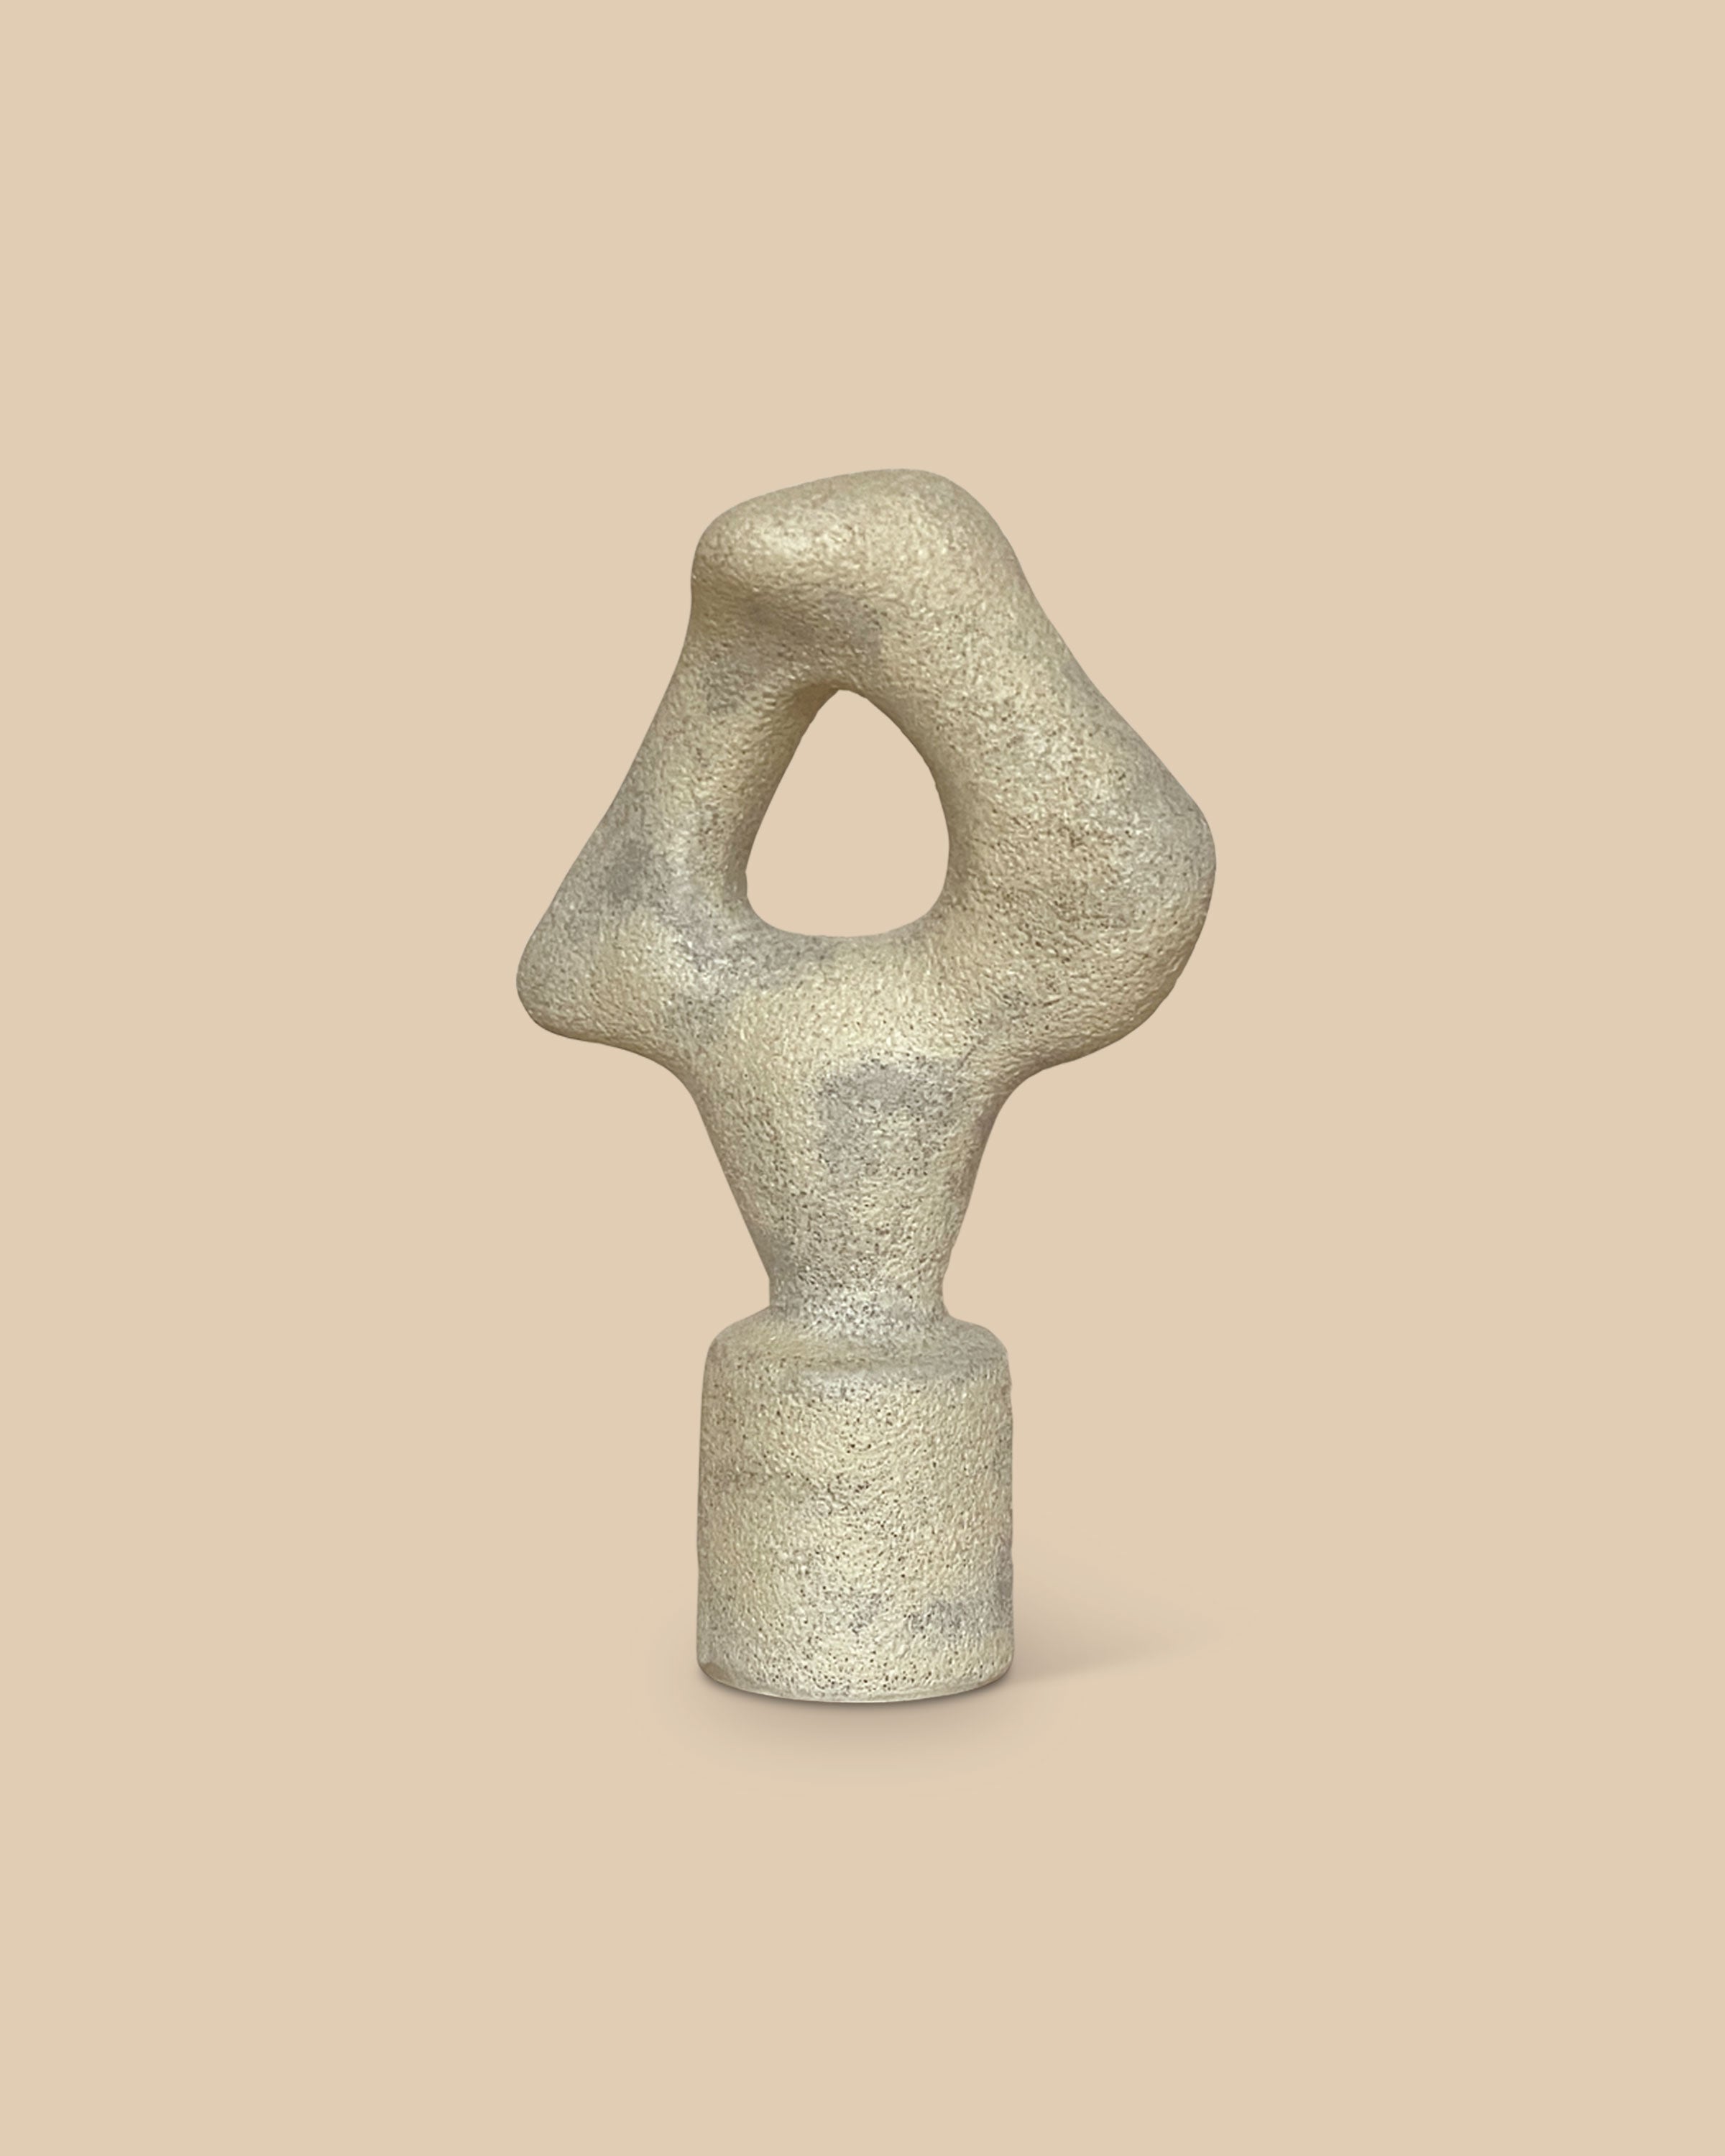 304. White Pedestal Vase w/ Clay Beads on Rim – Guardino Gallery